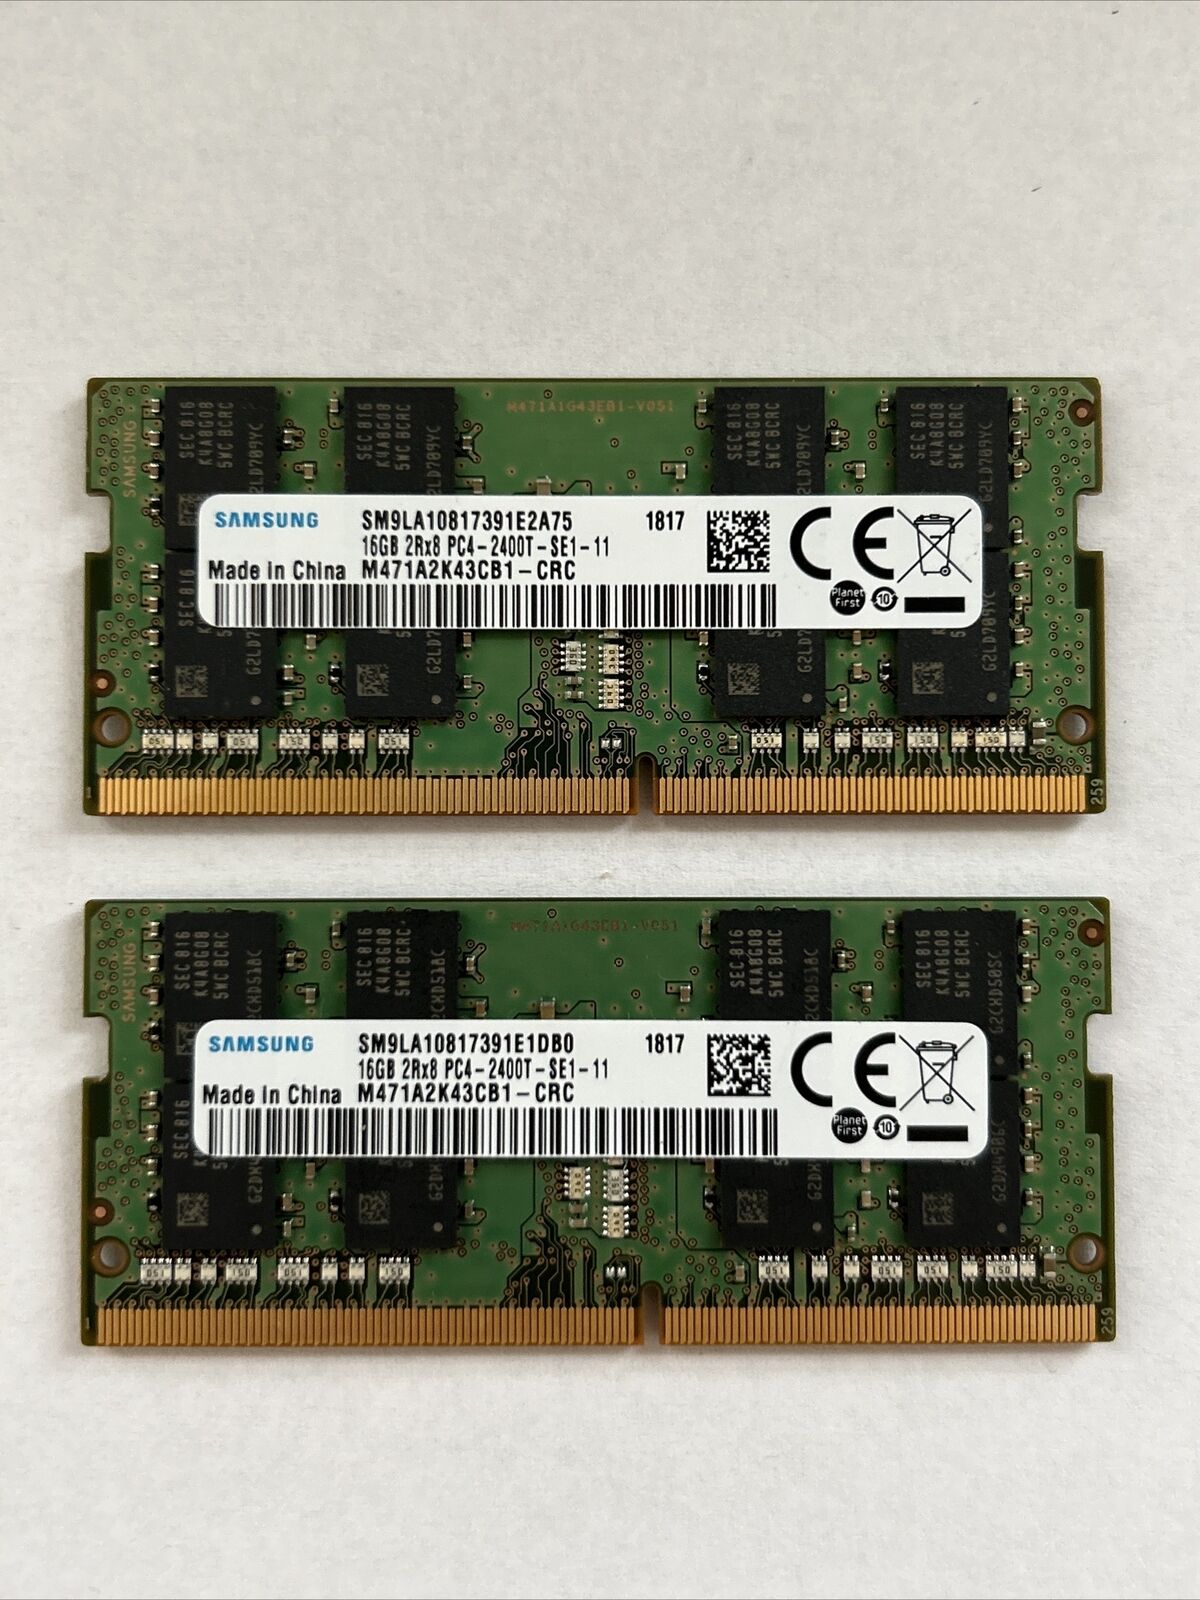 Samsung 32GB Kit (2x16GB) 2RX8 PC4-2400T-SE1-11 DDR4 SODIMM LAPTOP MEMORY RAM